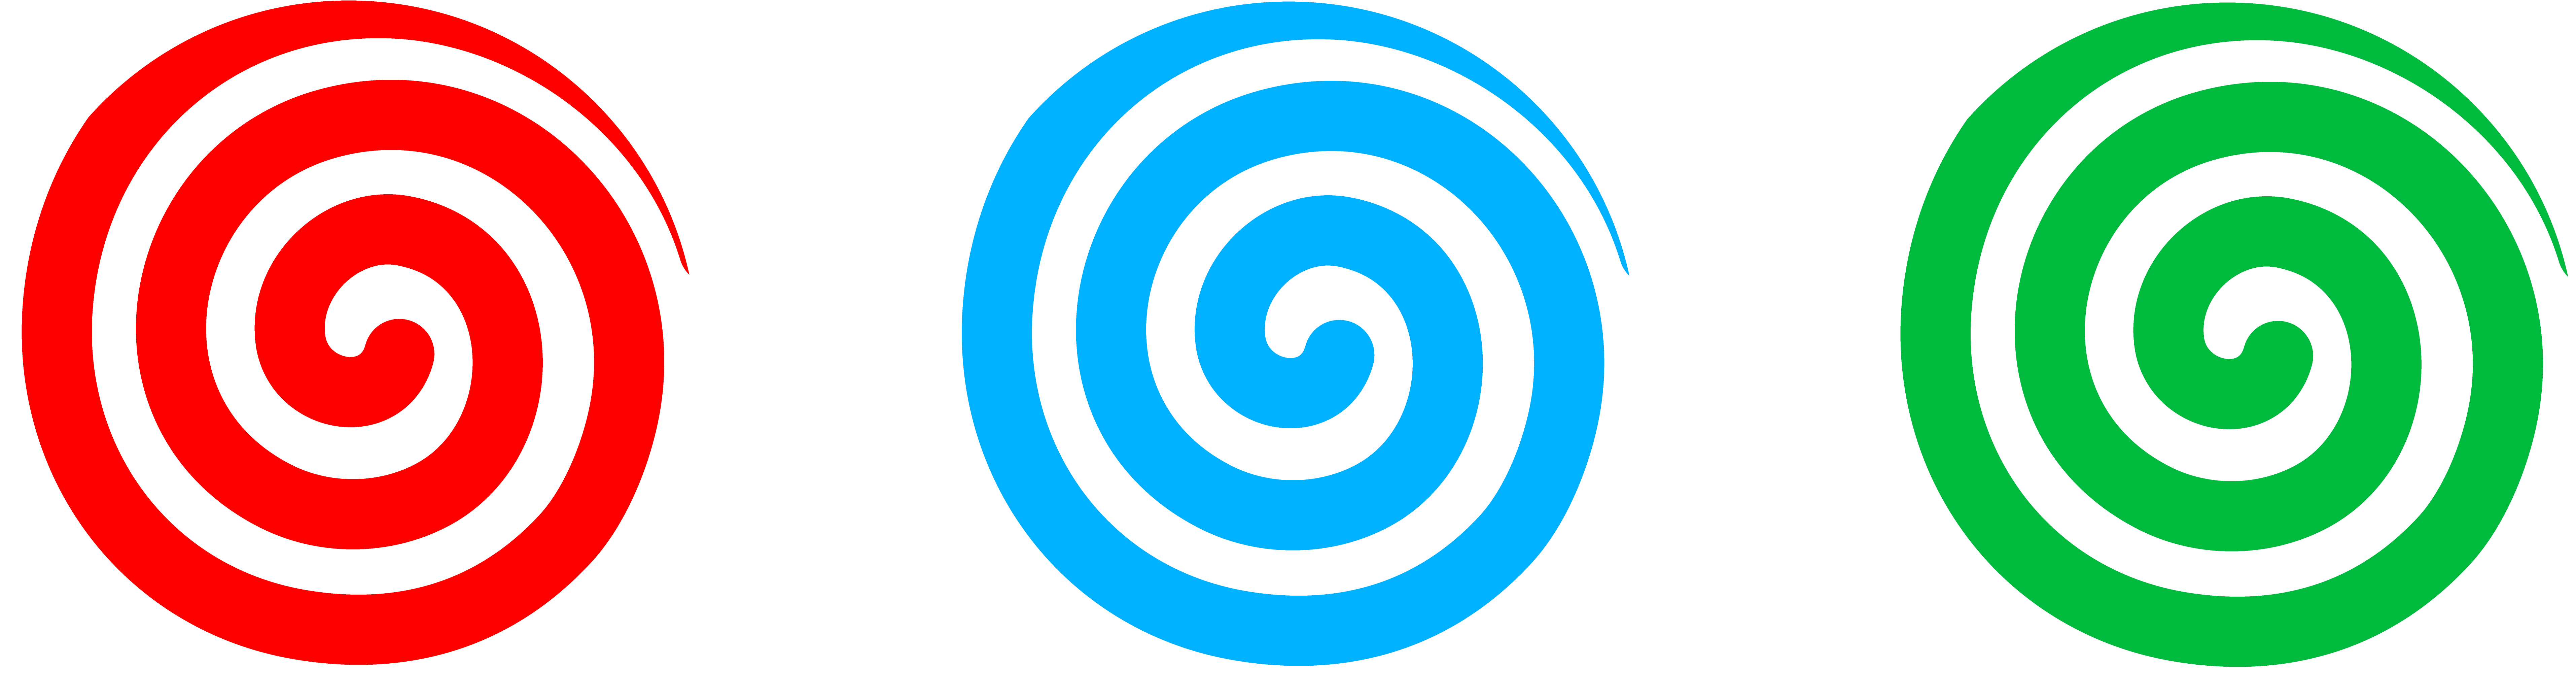 Swirl Clipart Spiral - Swirl Candy Clipart (7807x2174)